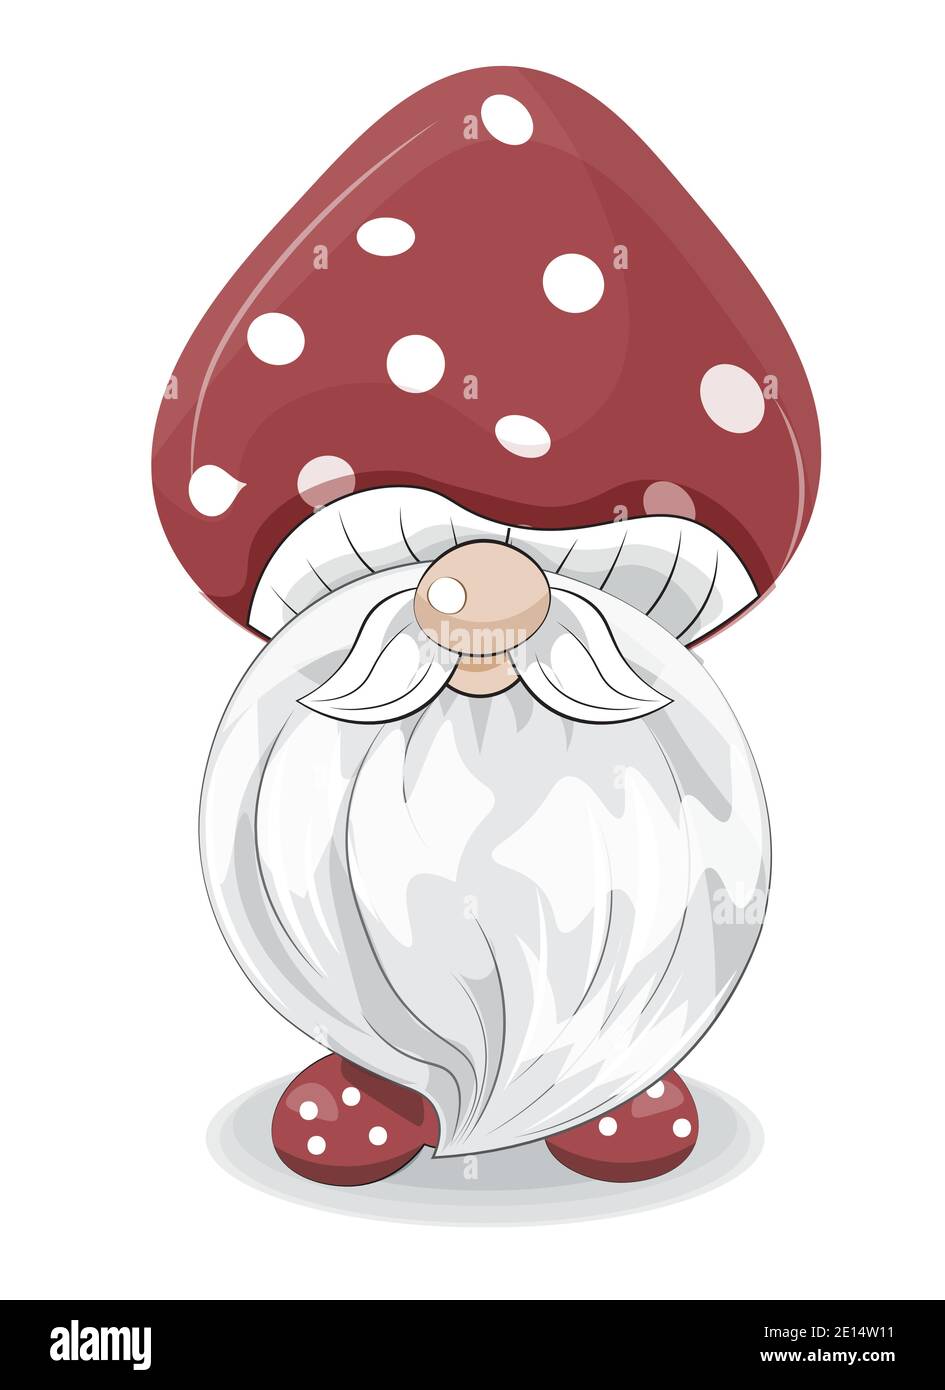 Mushroom drawing I made  rsketches